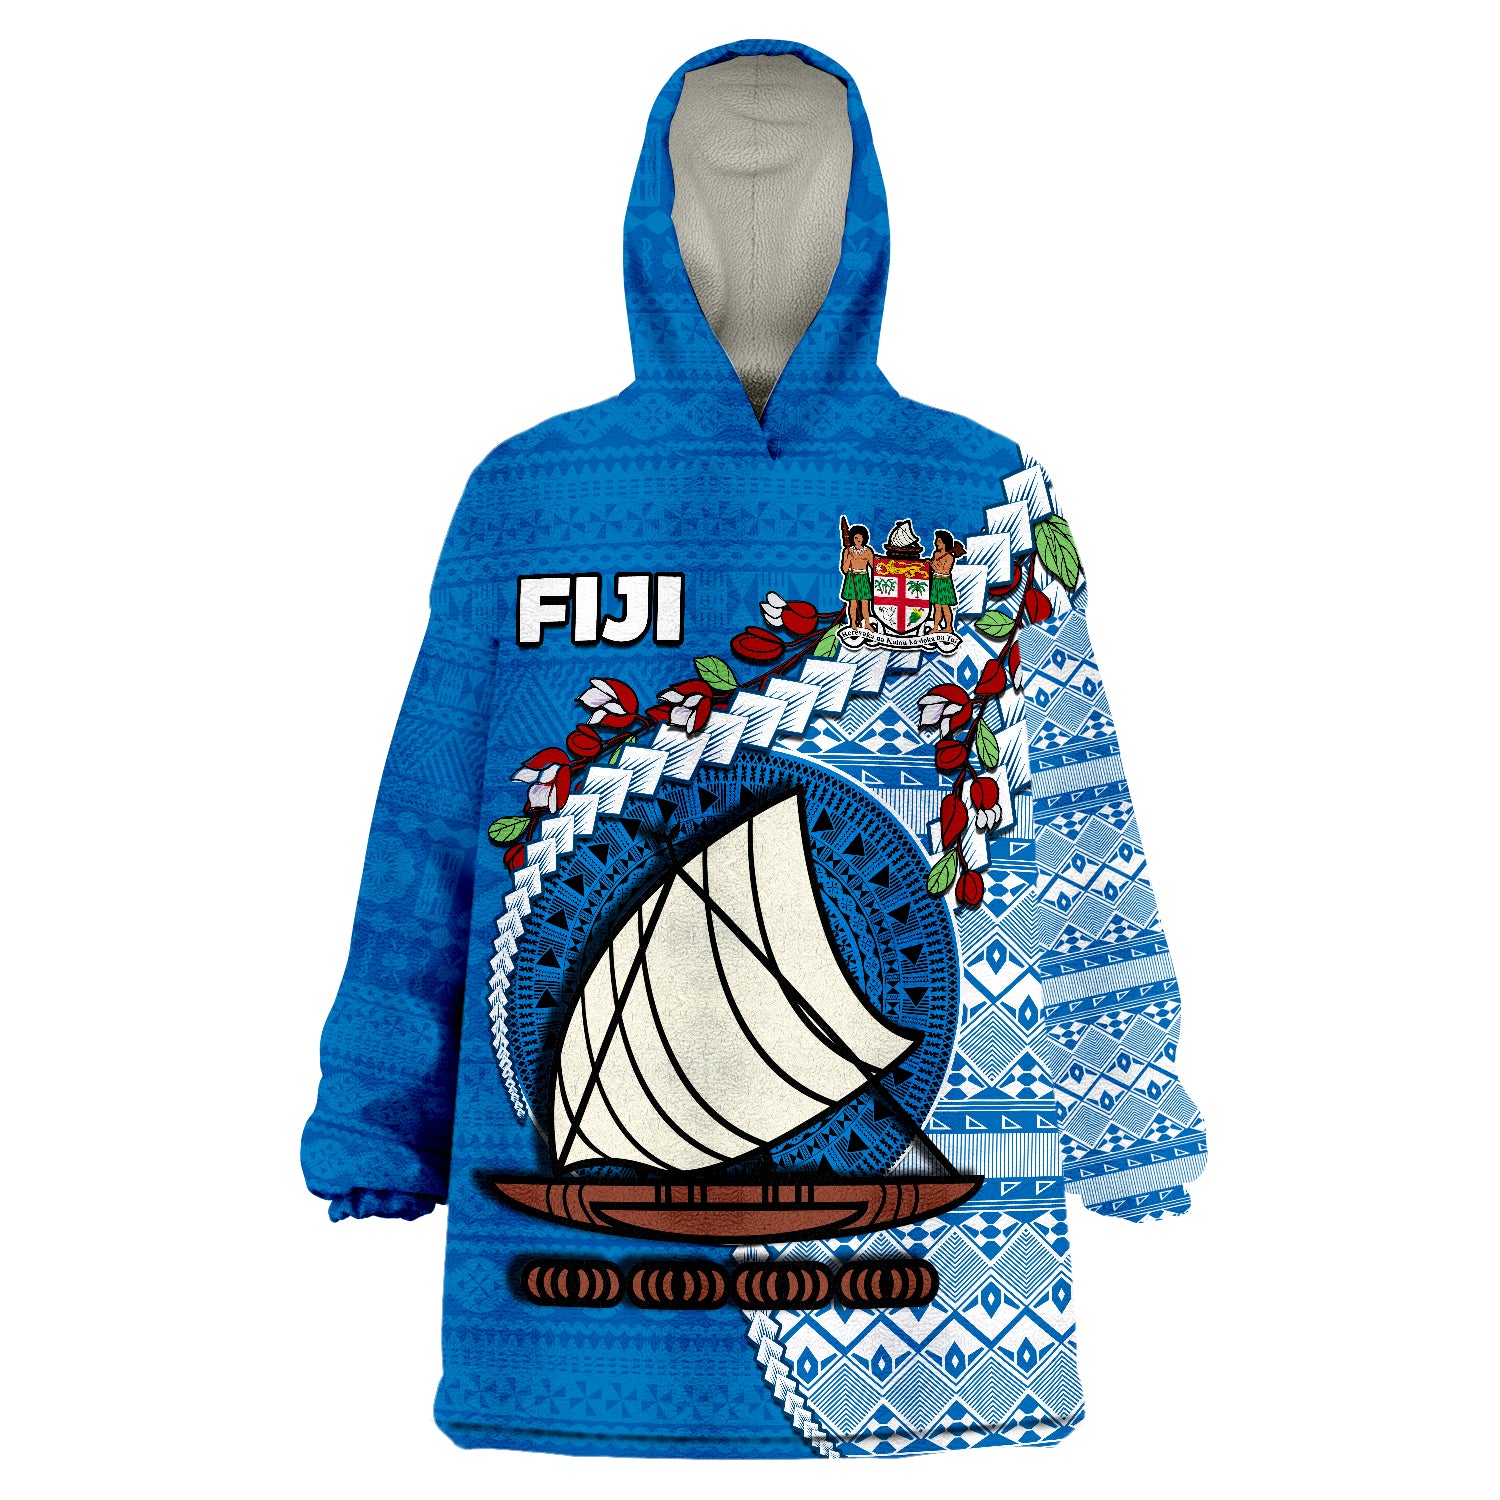 Fiji Fijian Drua Mix Tagimaucia Flower Blue Style Wearable Blanket Hoodie LT14 Unisex One Size - Polynesian Pride